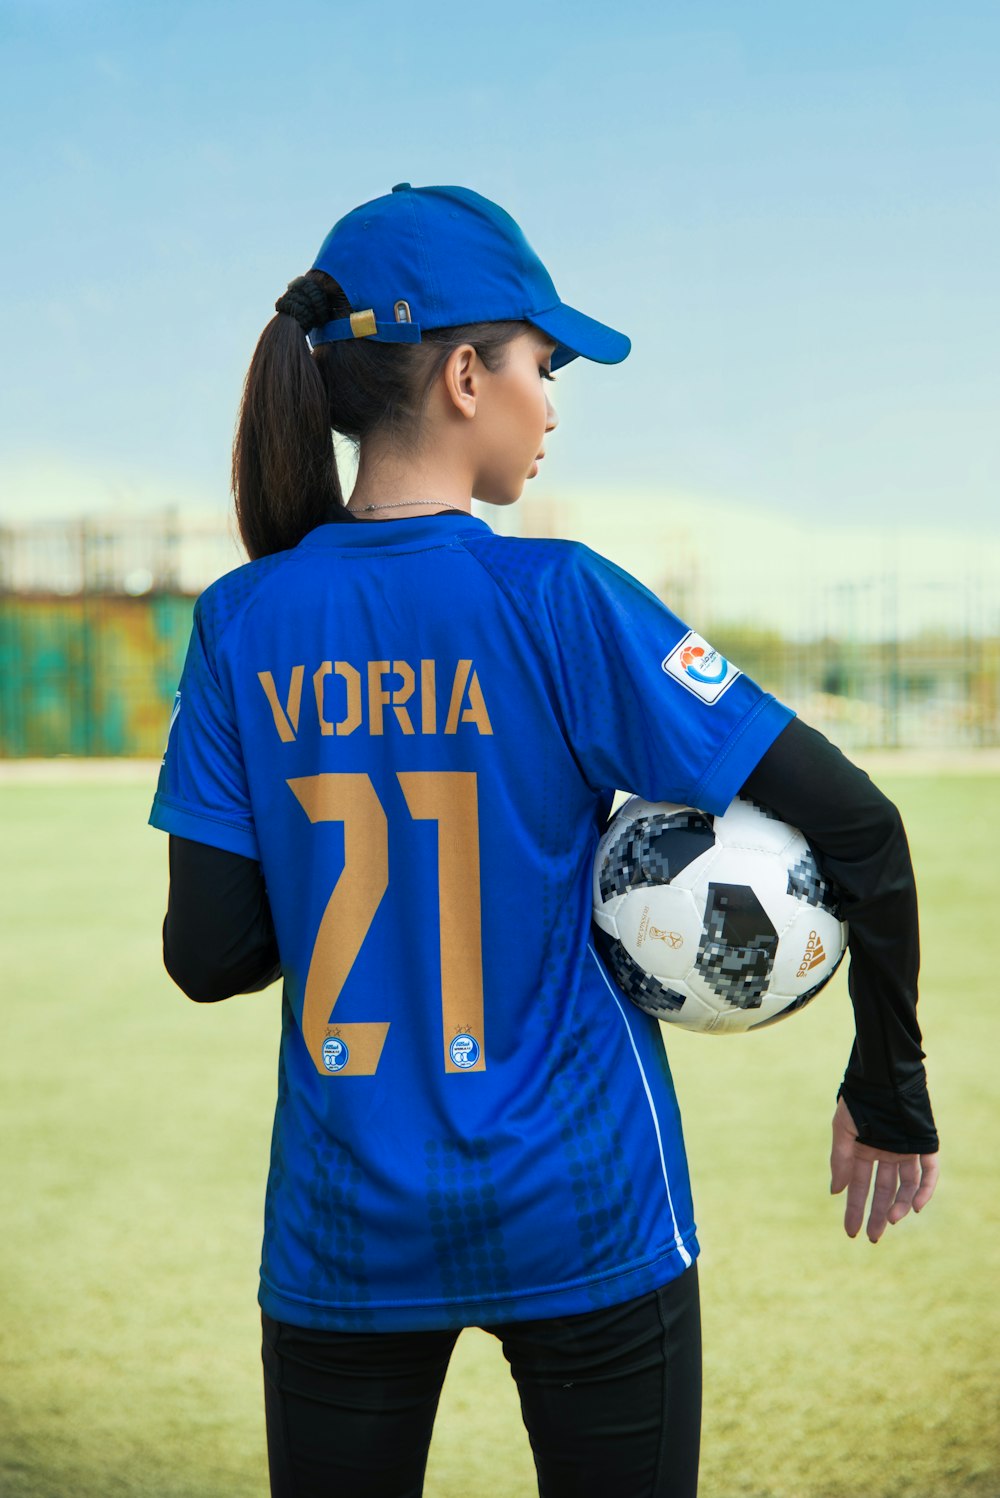 Une femme en uniforme bleu tenant un ballon de soccer